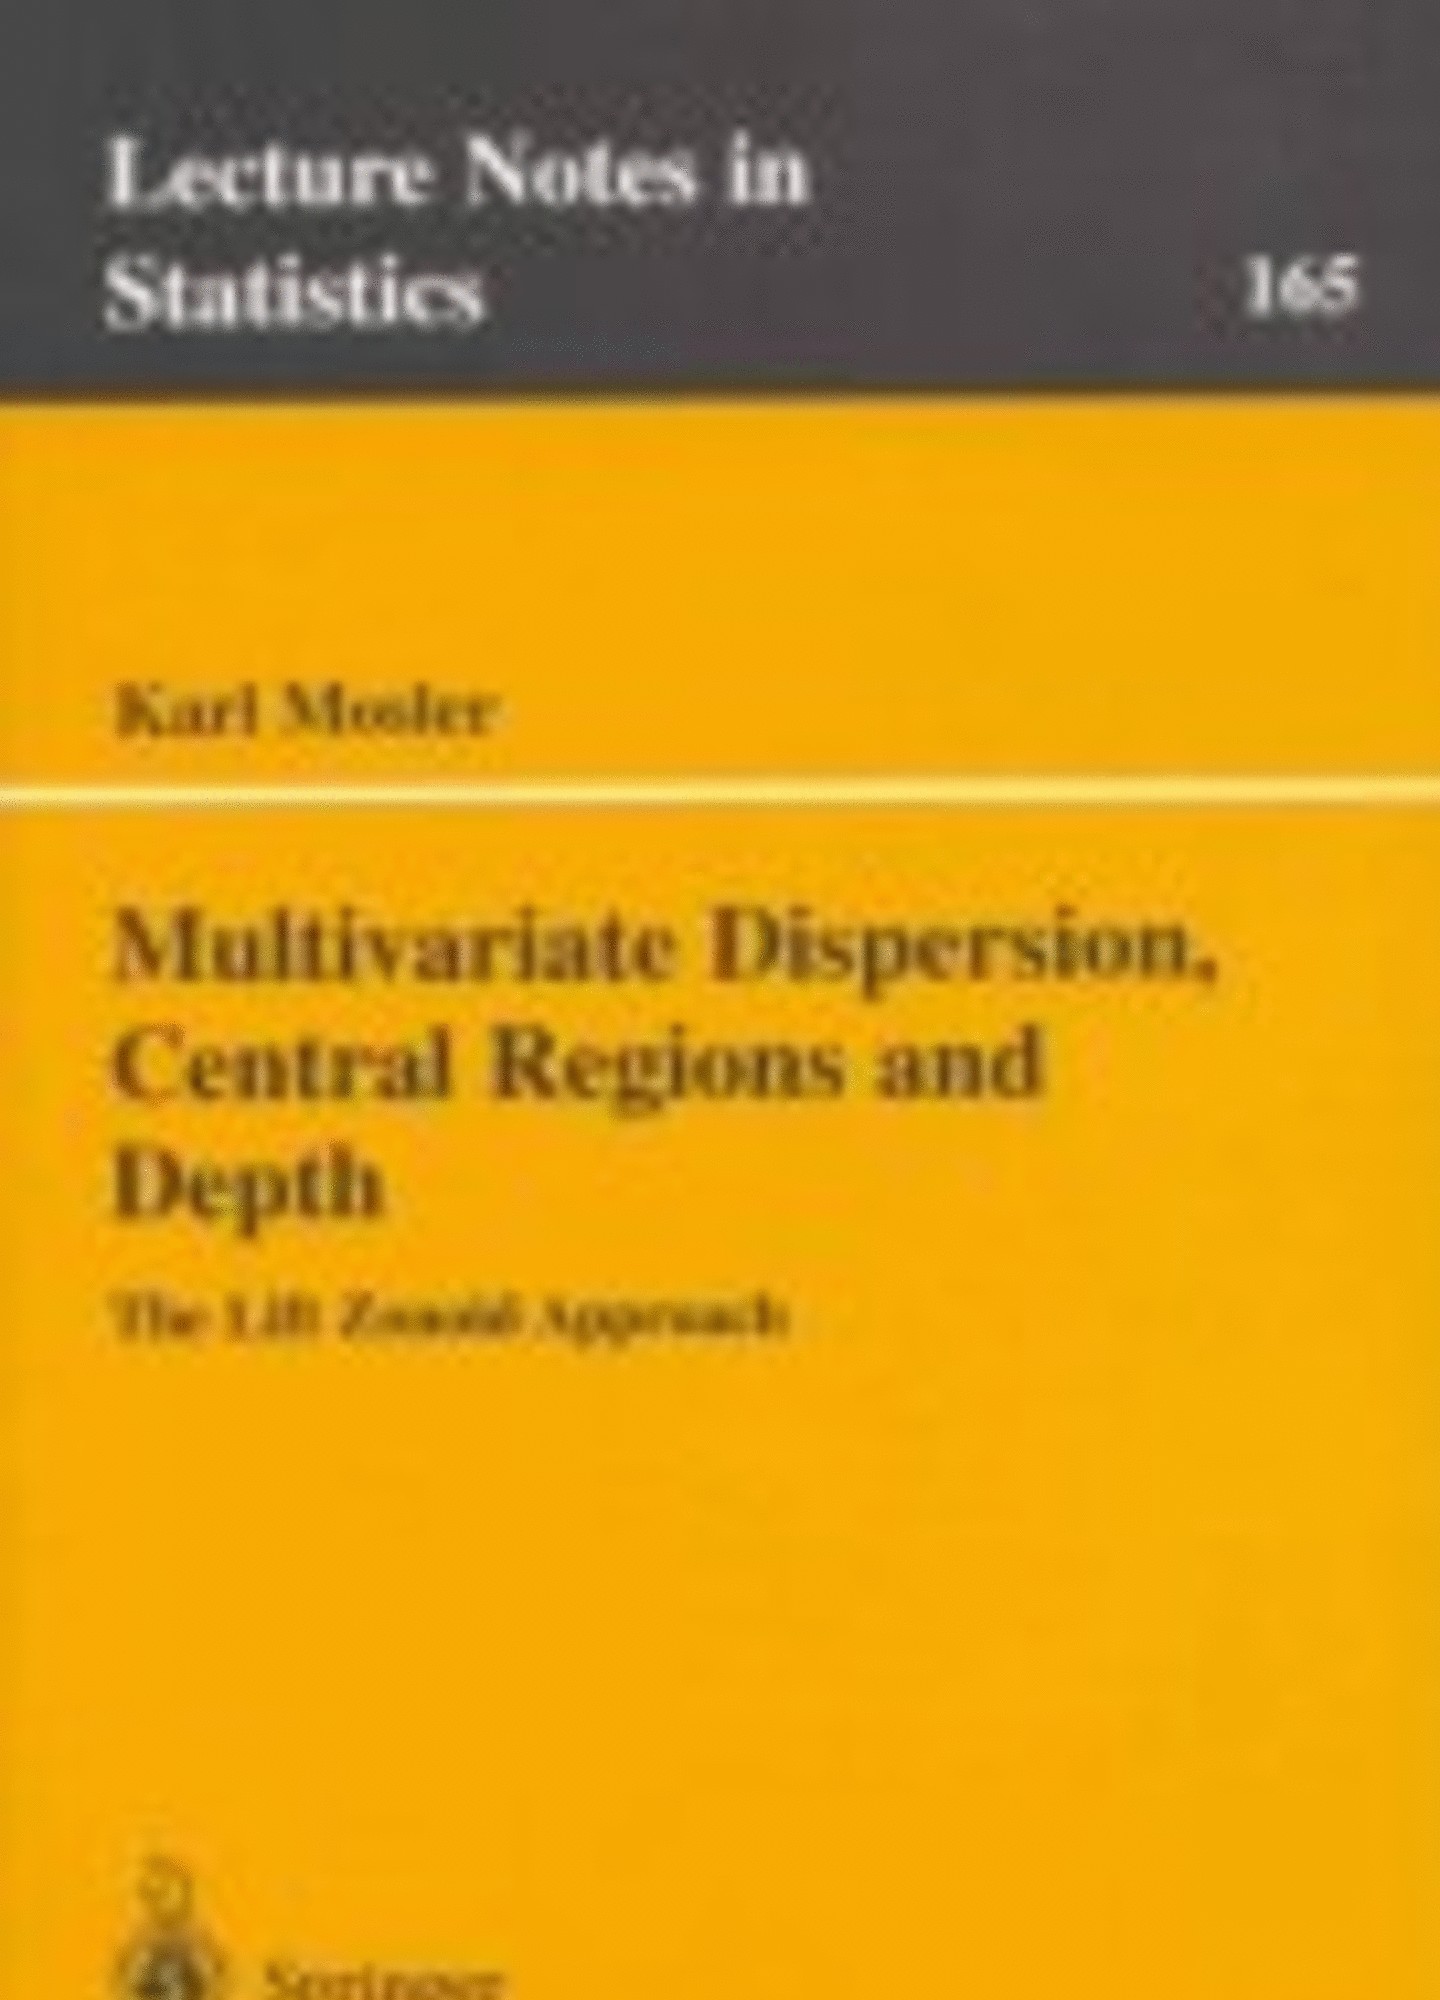 Multivariate Dispersion, Central Regions and Depth